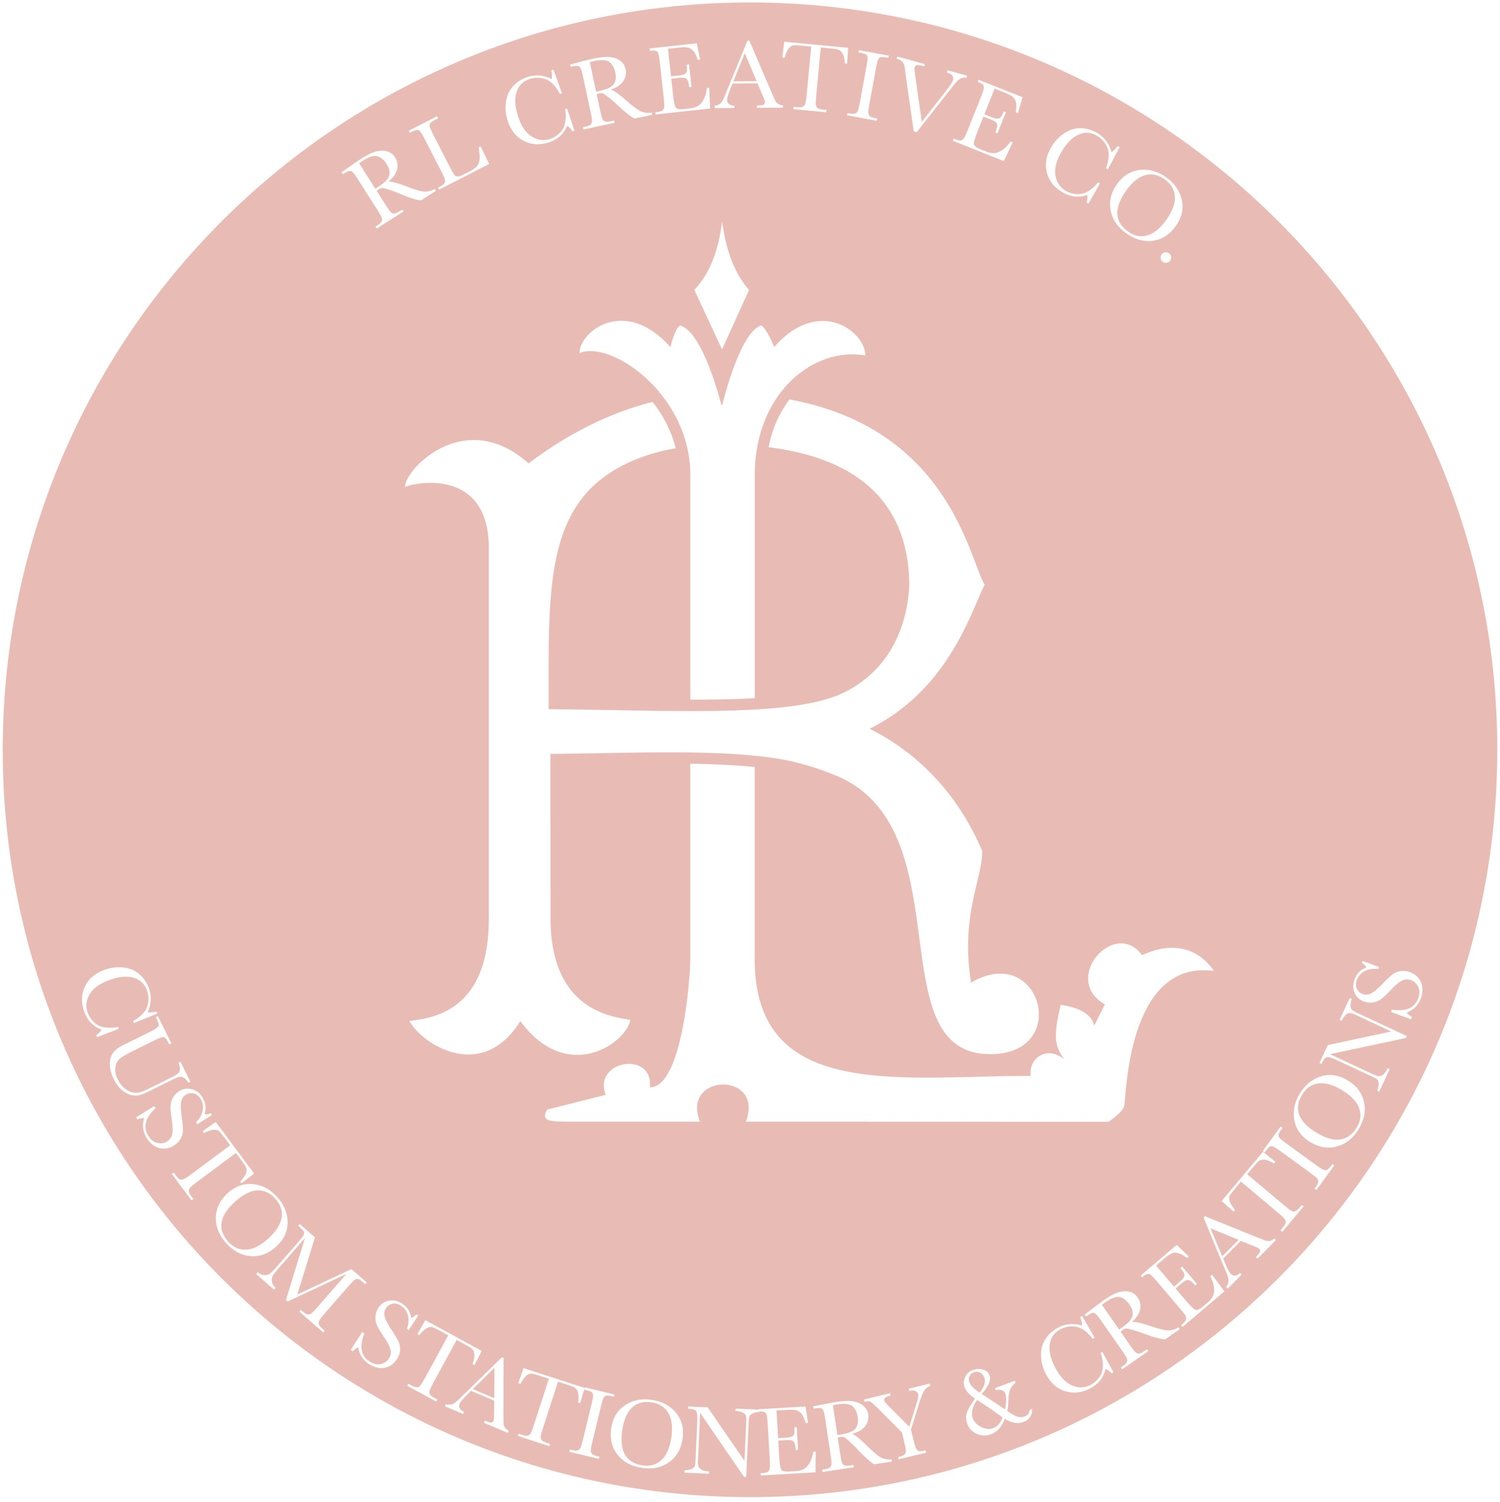 RL Creative Co.